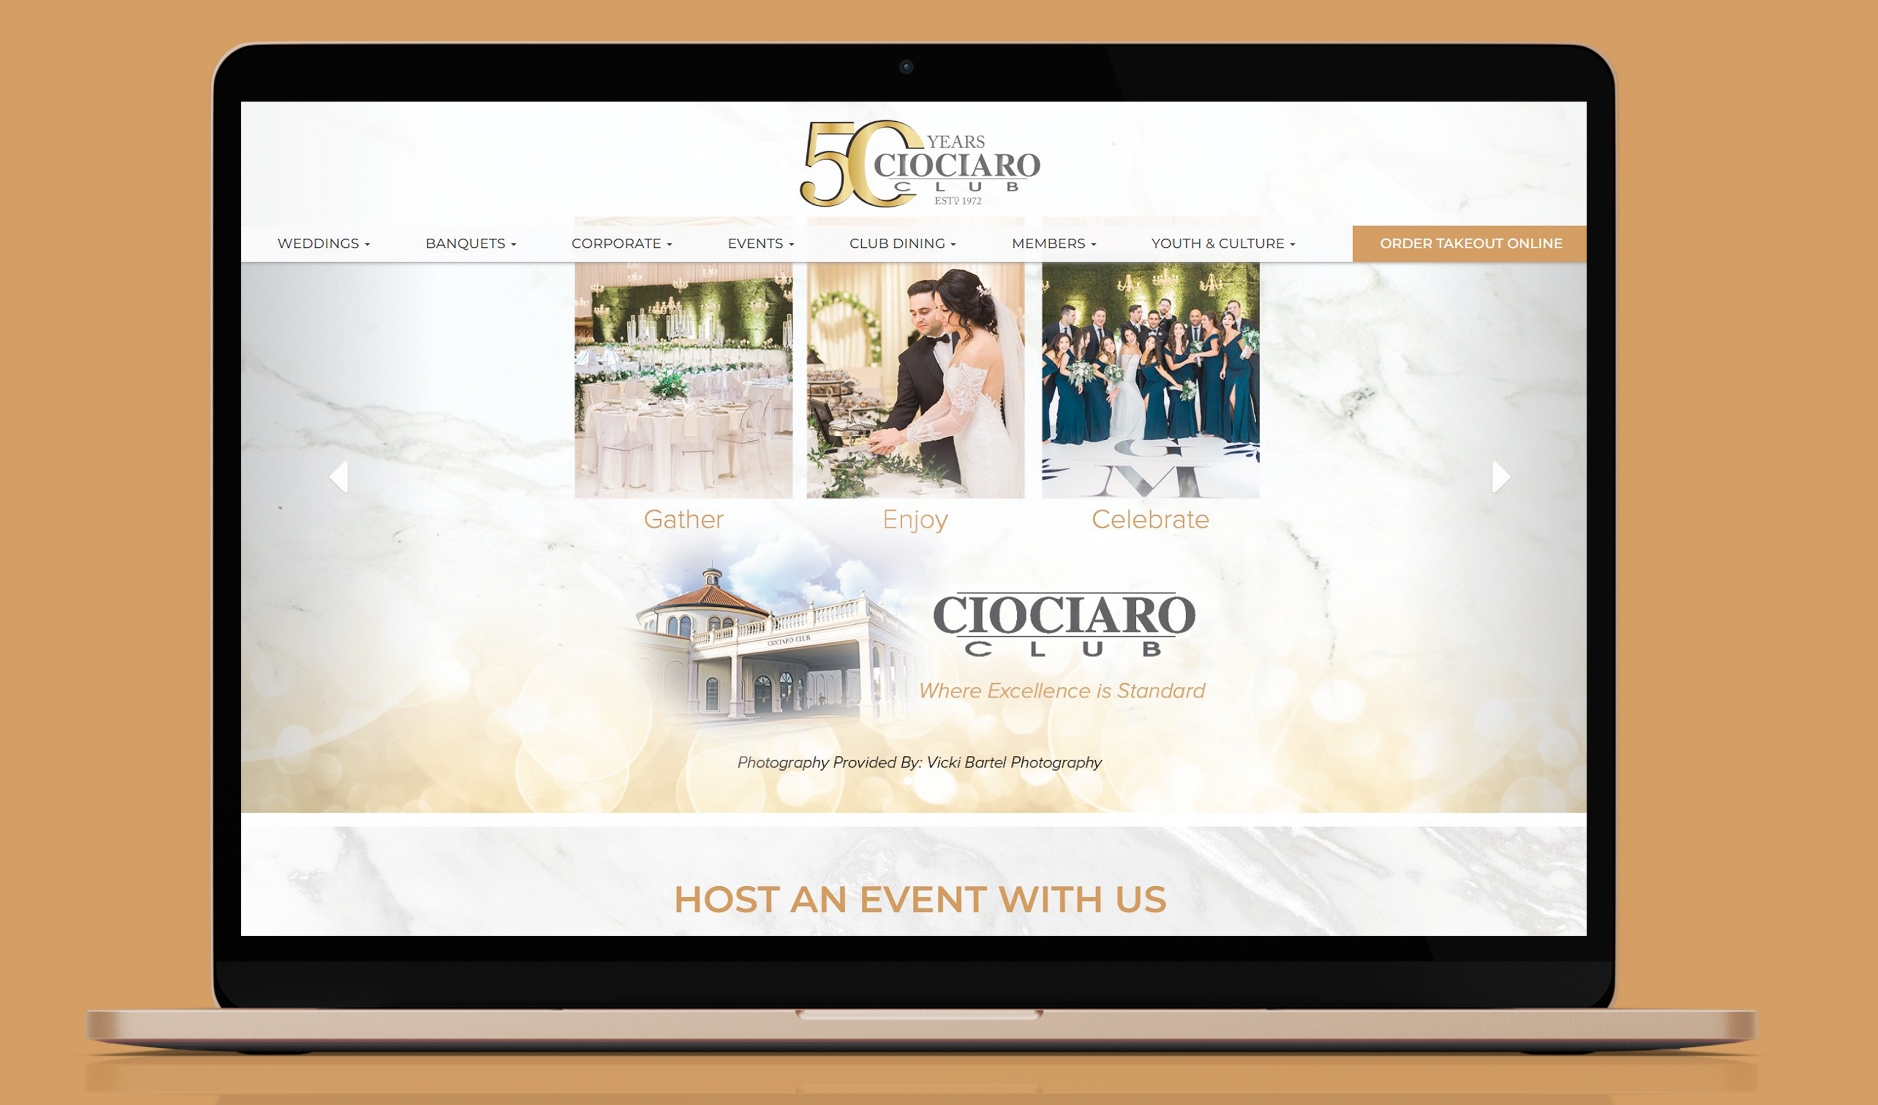 Ciociaro Club website displayed on a laptop screen